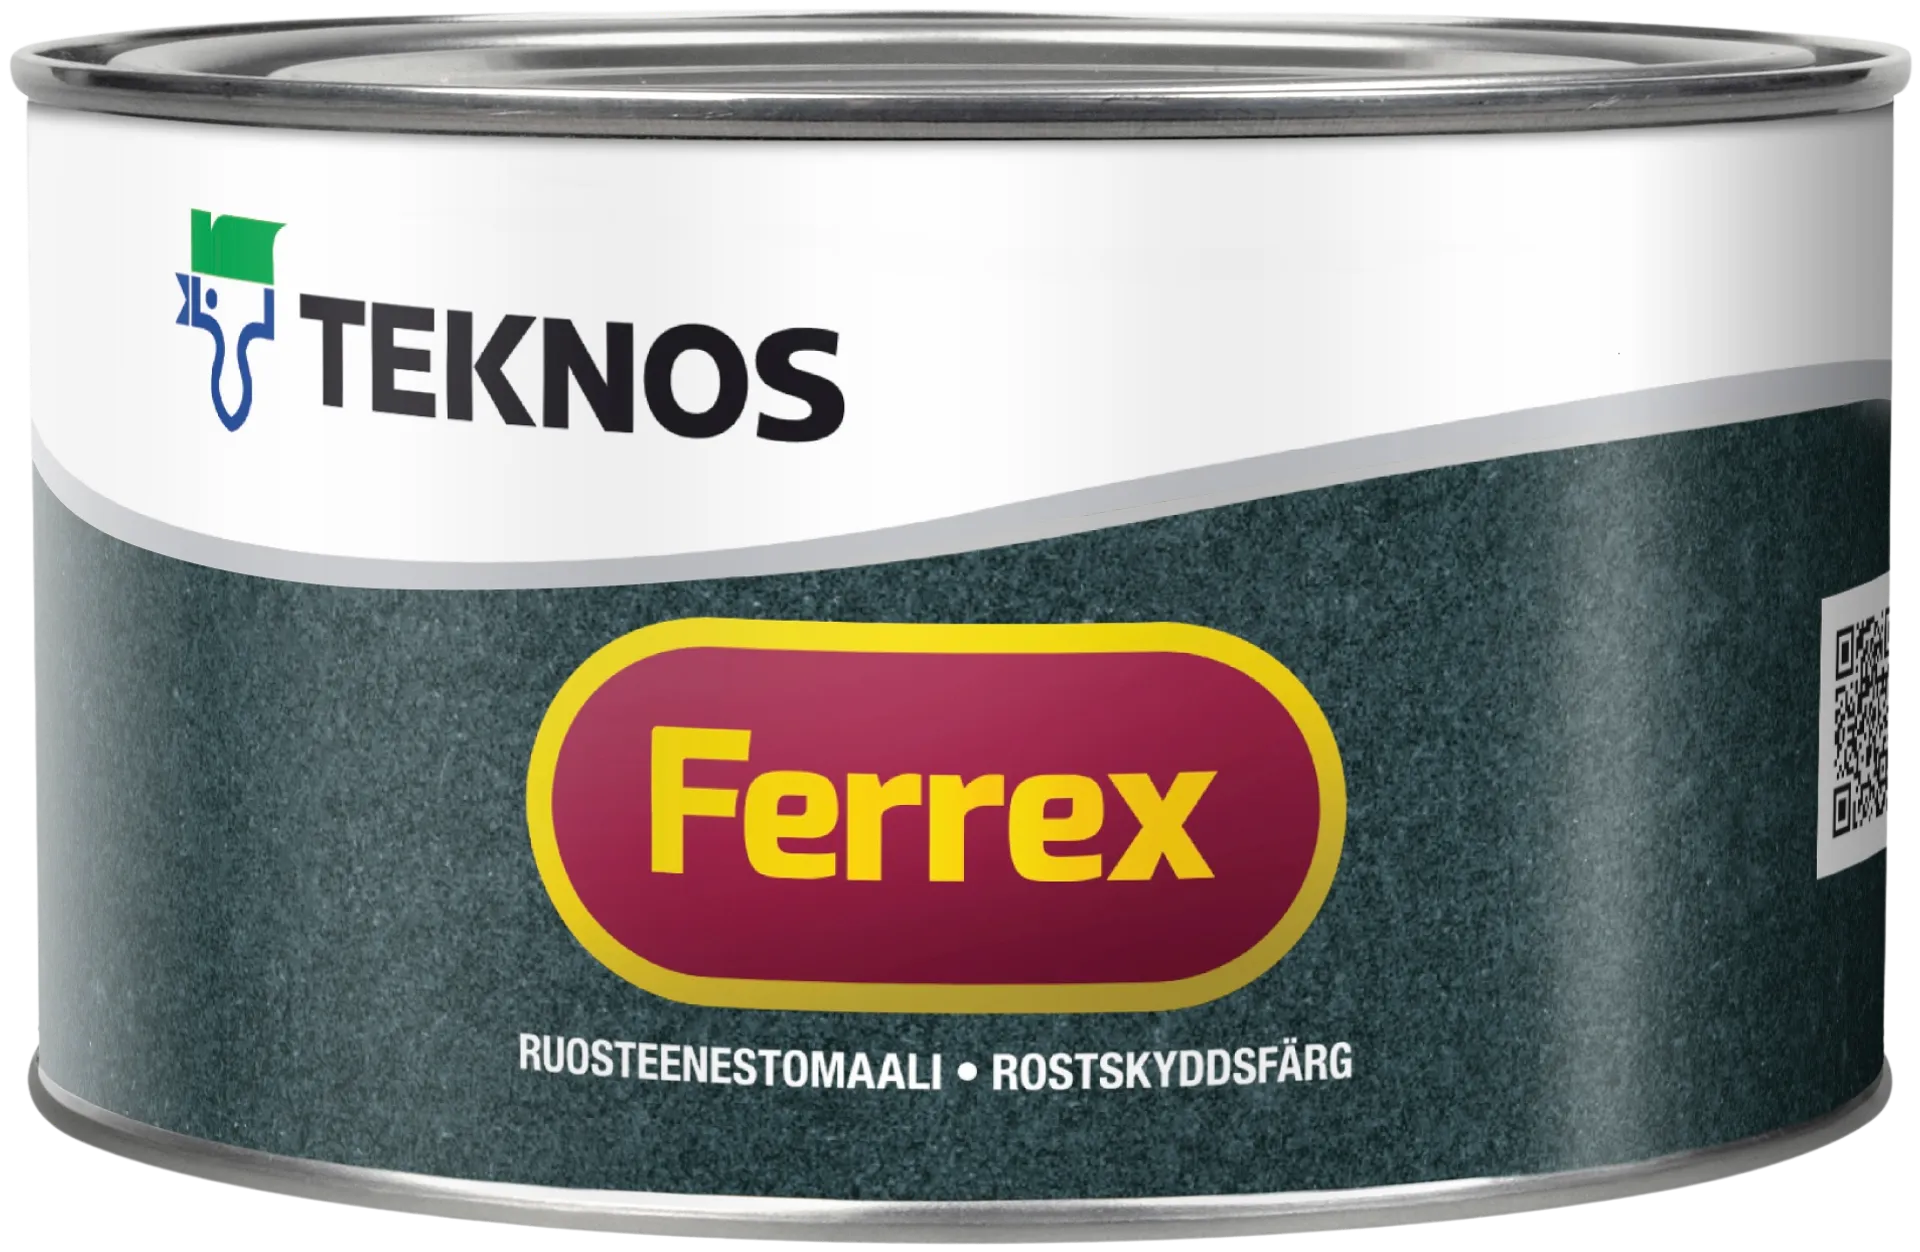 Teknos Ferrex ruosteenestomaali 0,33l musta